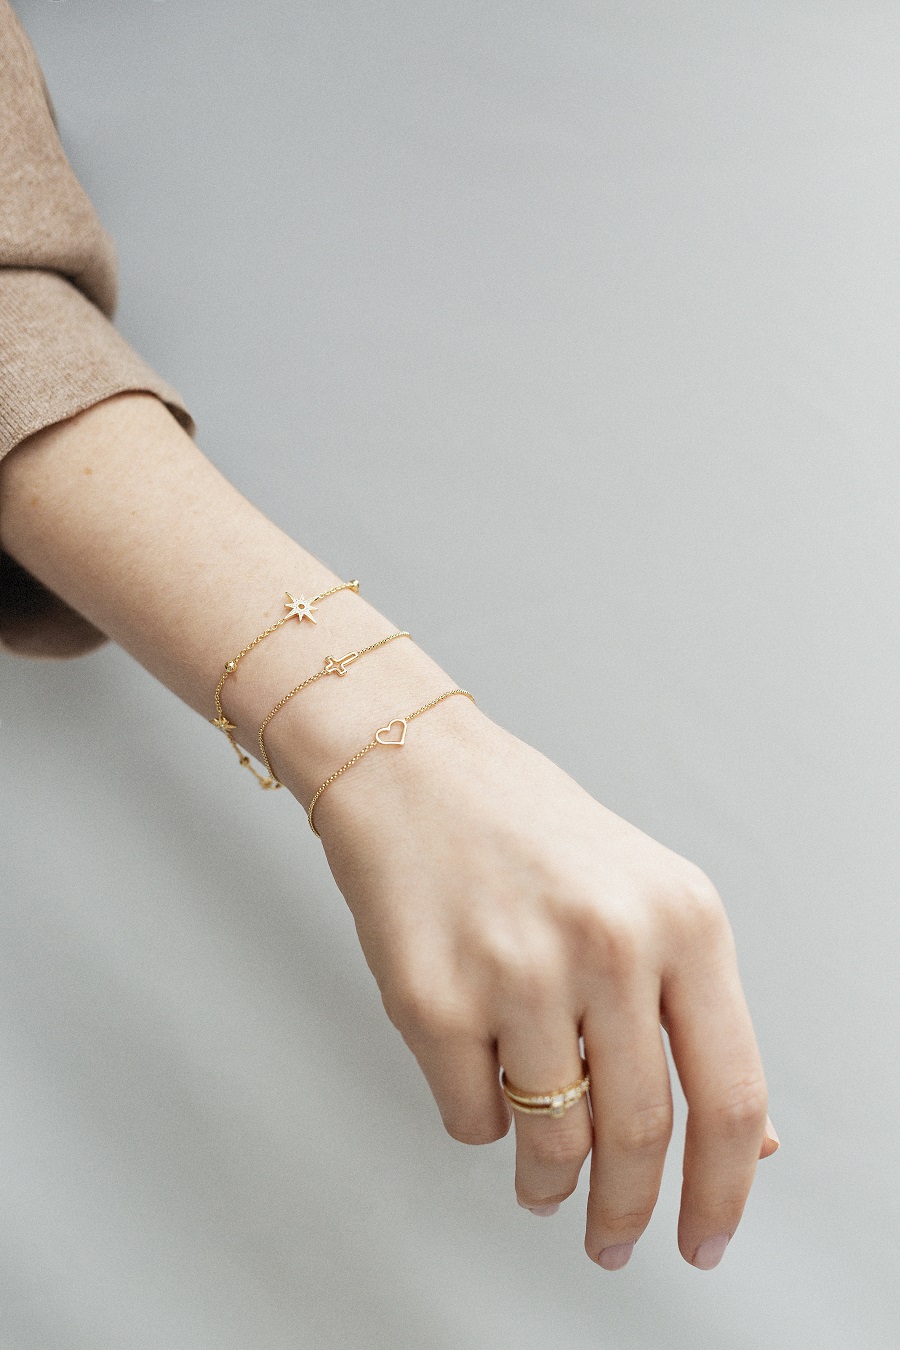 joyas minimalistas Buenaletra joyeria tienda online oro plata anillo pulsera collar pendiente sencillo